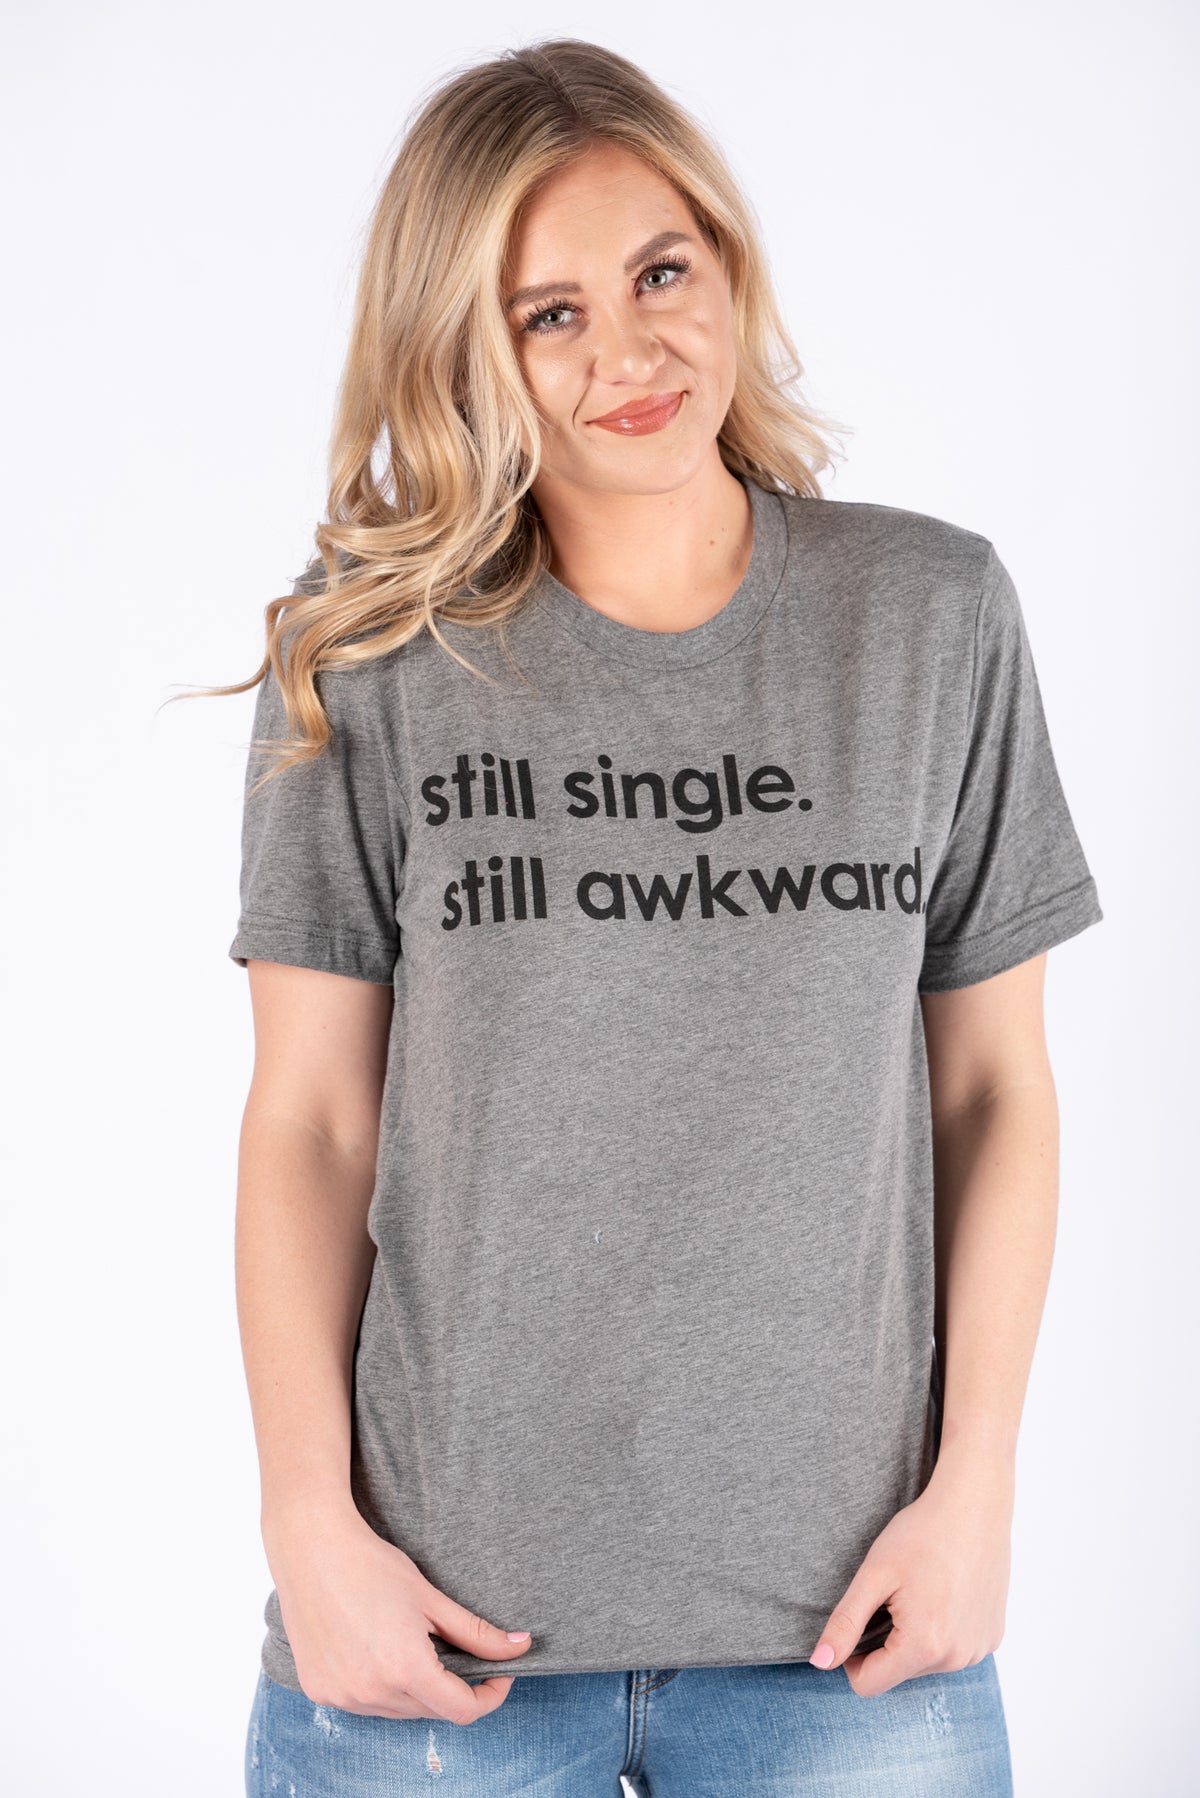 Still single Still awkward unisex short sleeve t-shirt grey - Stylish T-shirts - Trendy Graphic T-Shirts and Tank Tops at Lush Fashion Lounge Boutique in Oklahoma City